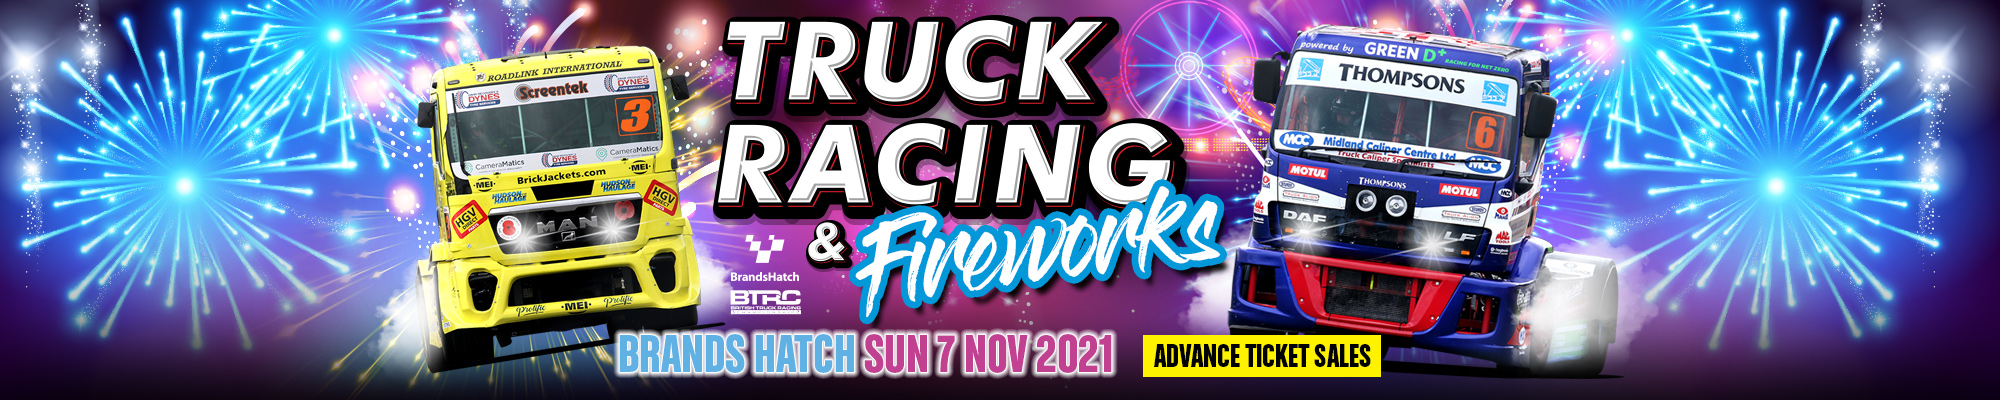 British Truck Racing & Fireworks